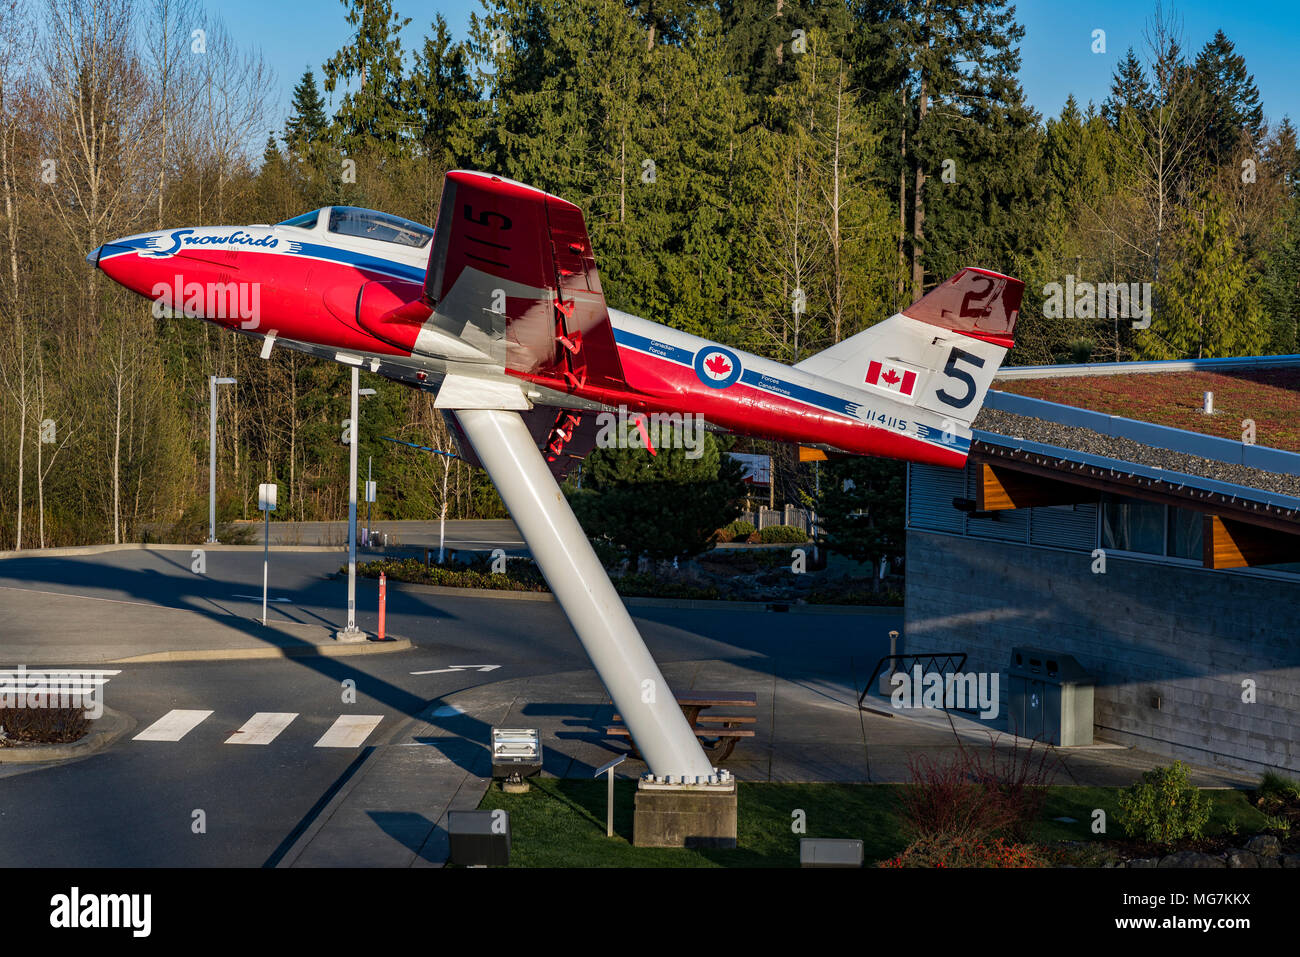 Forze canadesi Snowbird velivolo acrobatico, Canadair CT-114 Tutor, Comox Valley Visitor Cenre, Courtenay, British Columbia, Canada. Foto Stock